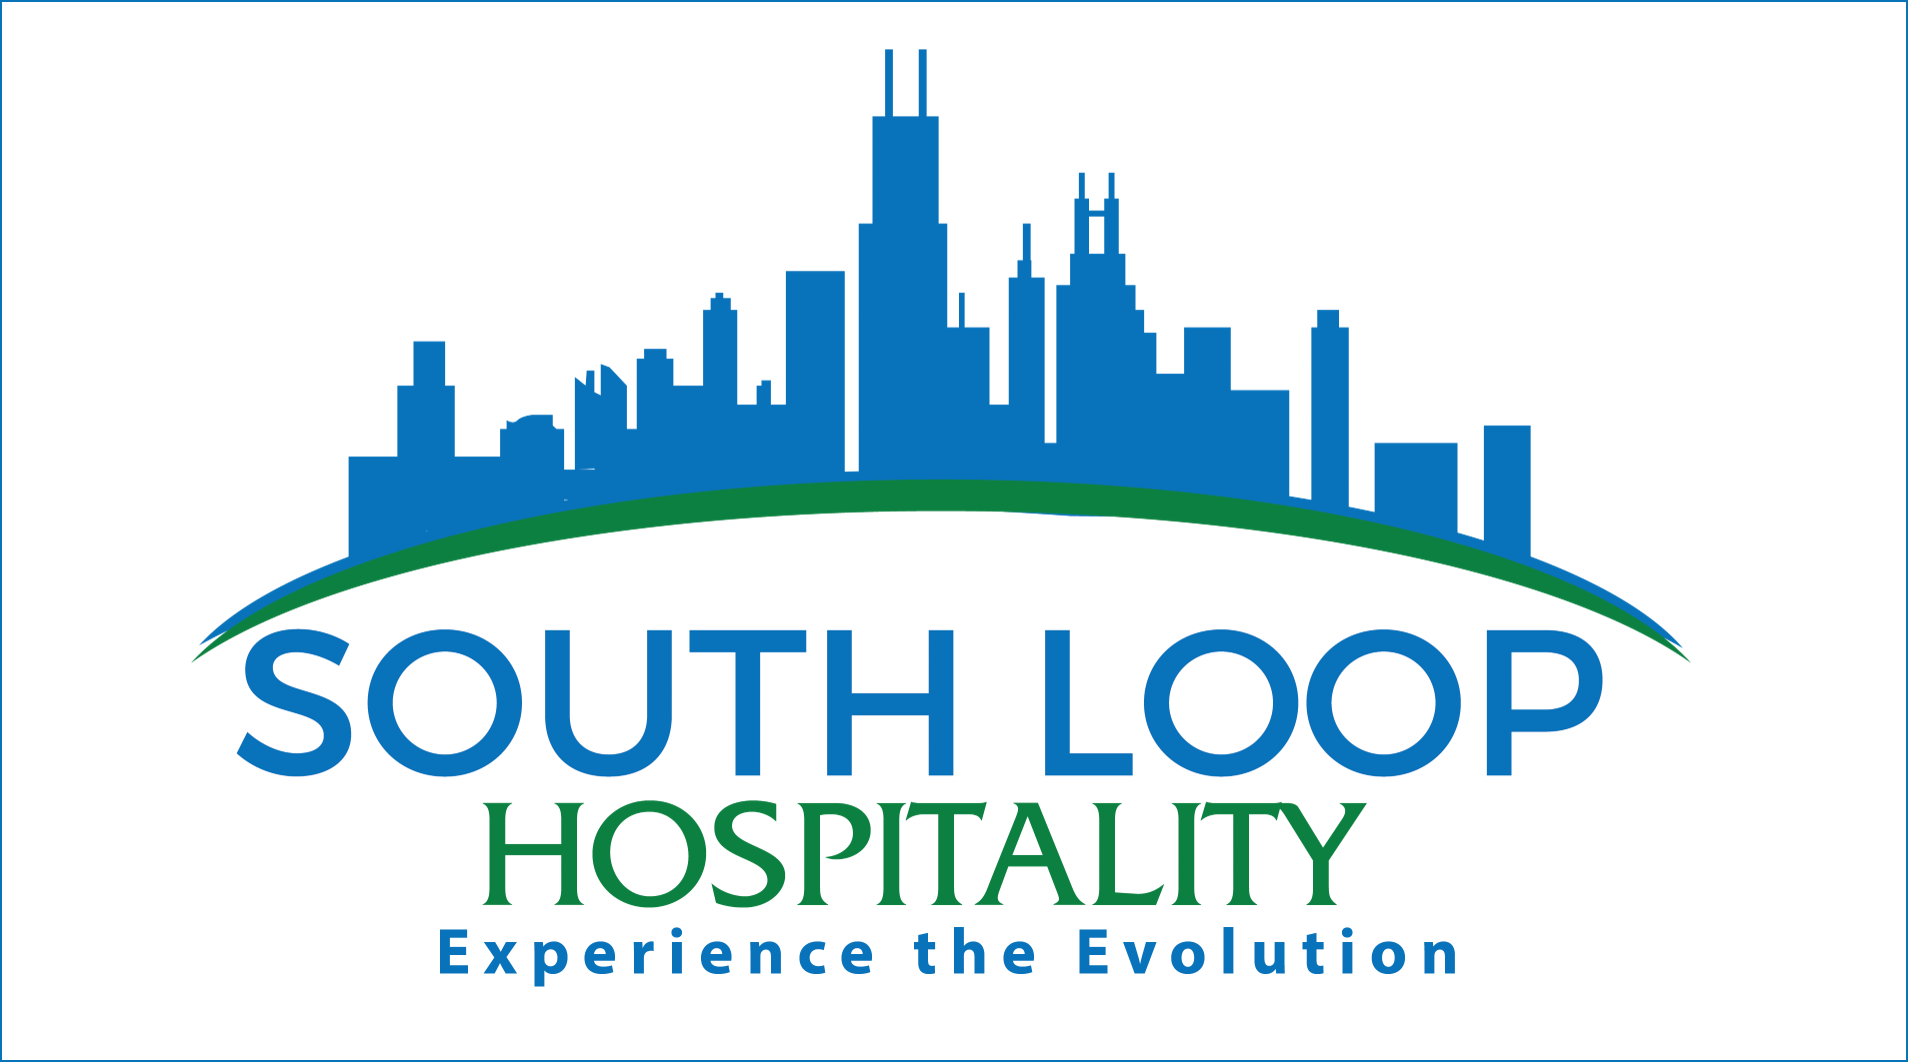 South Loop Hospitality